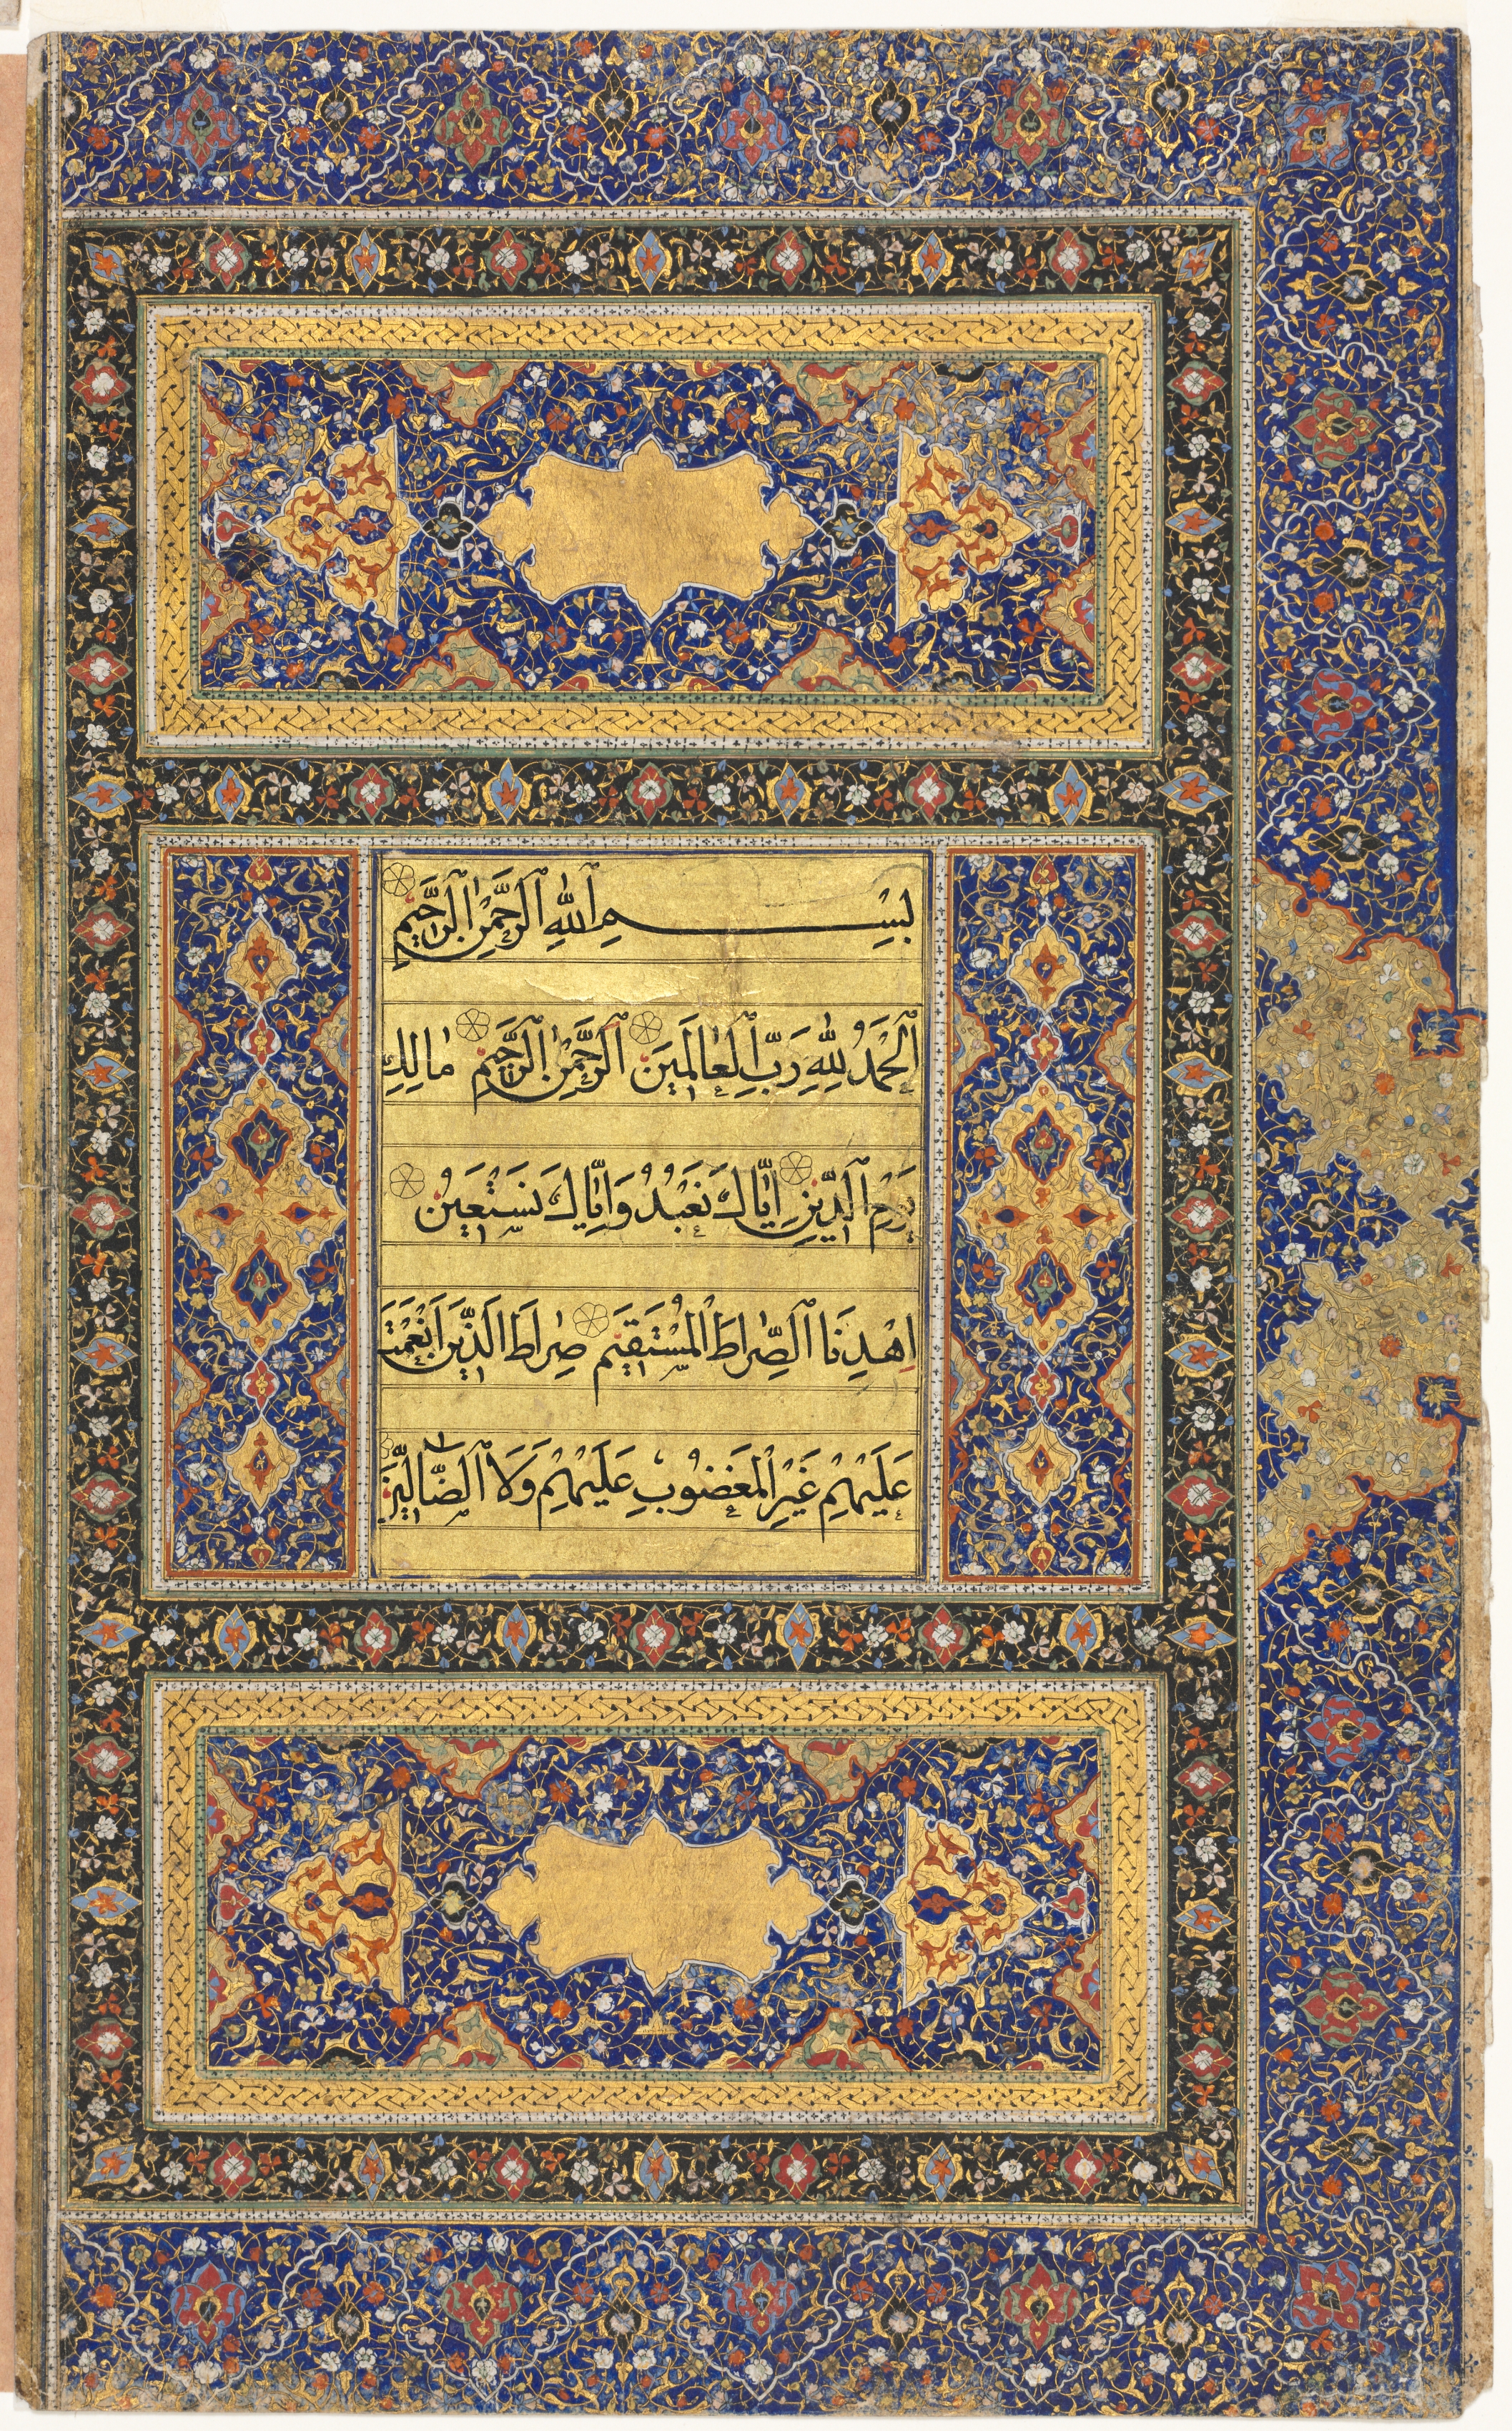 Qur'an Manuscript Folio (Verso); Right folio of Double-Page Illuminated Frontispiece